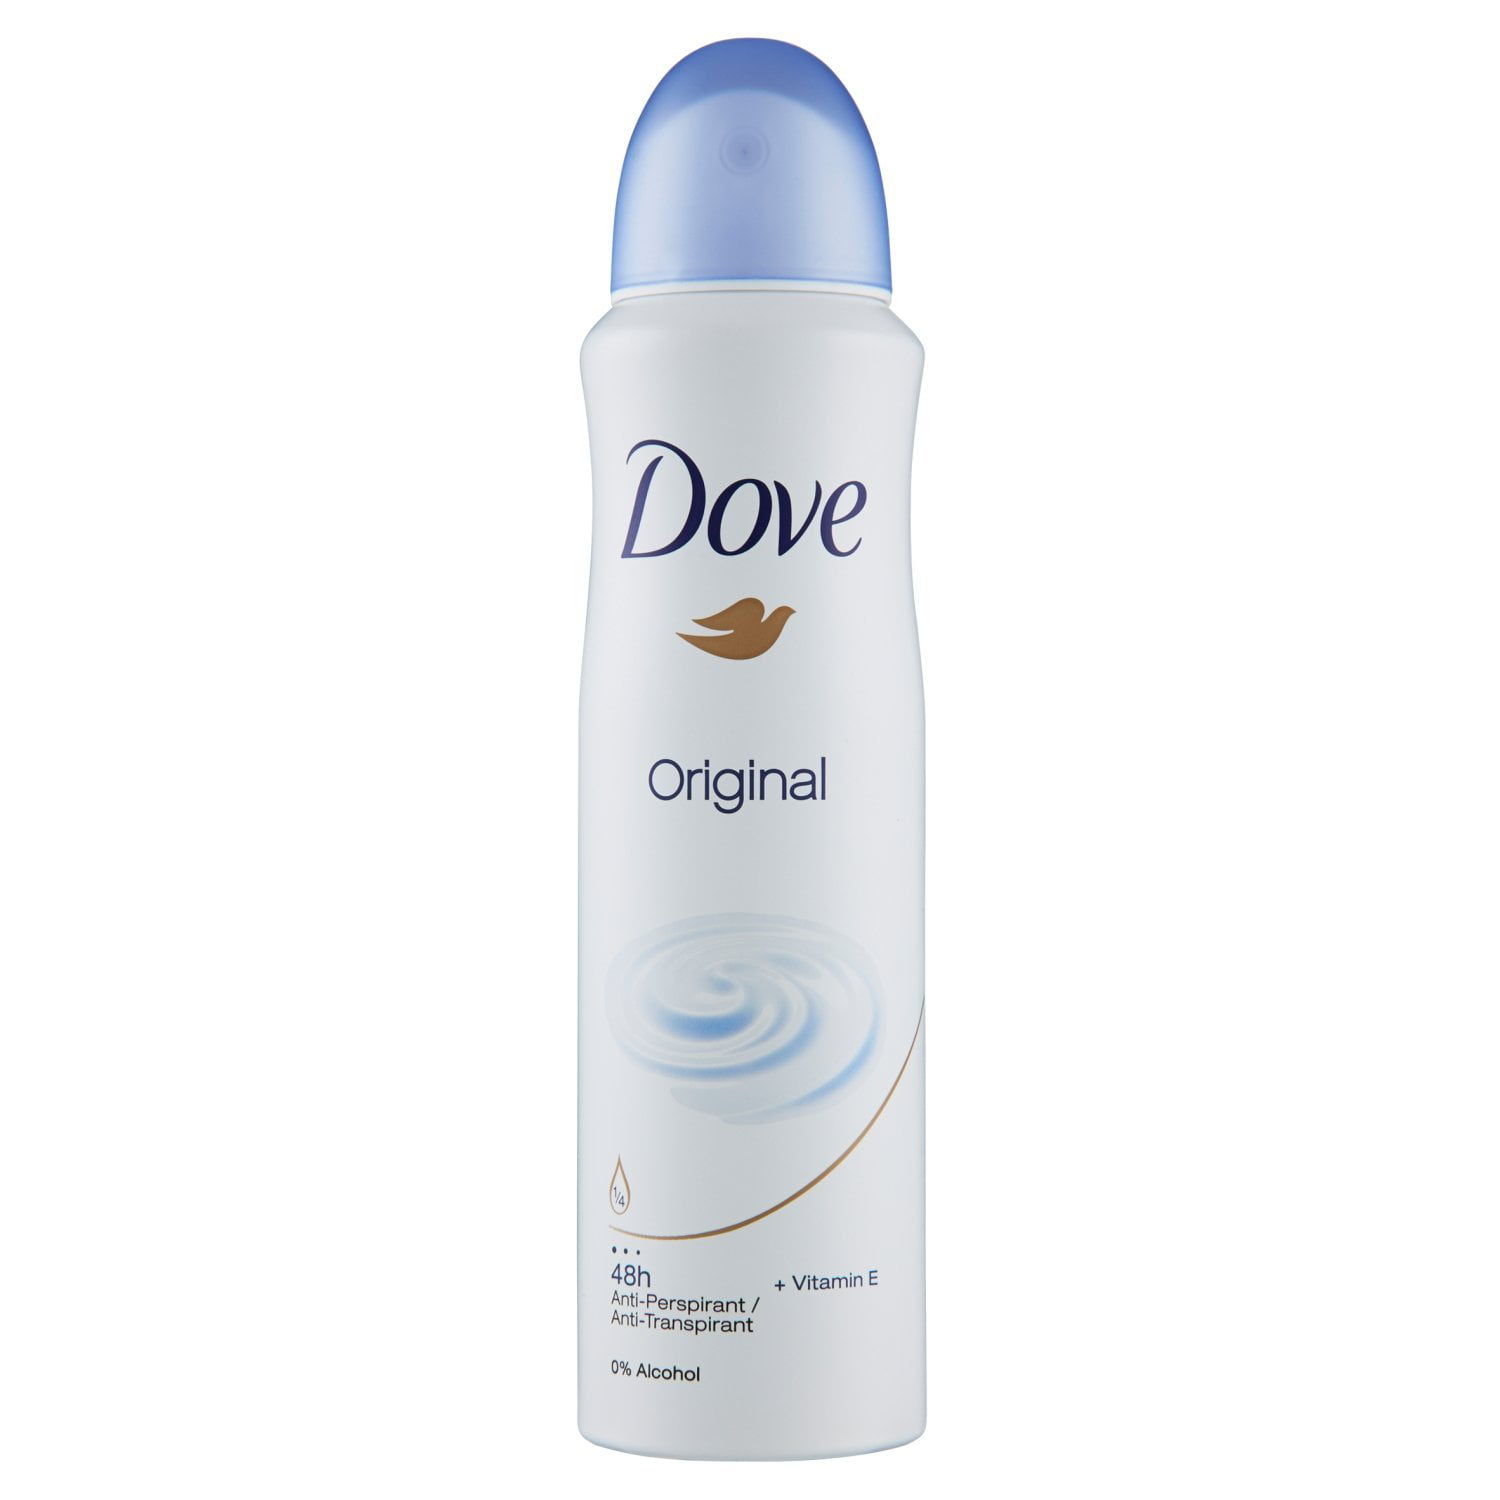 Dove Original Anti-Perspirant Deodorant Spray 150ml 24-48 Hr Protection ...